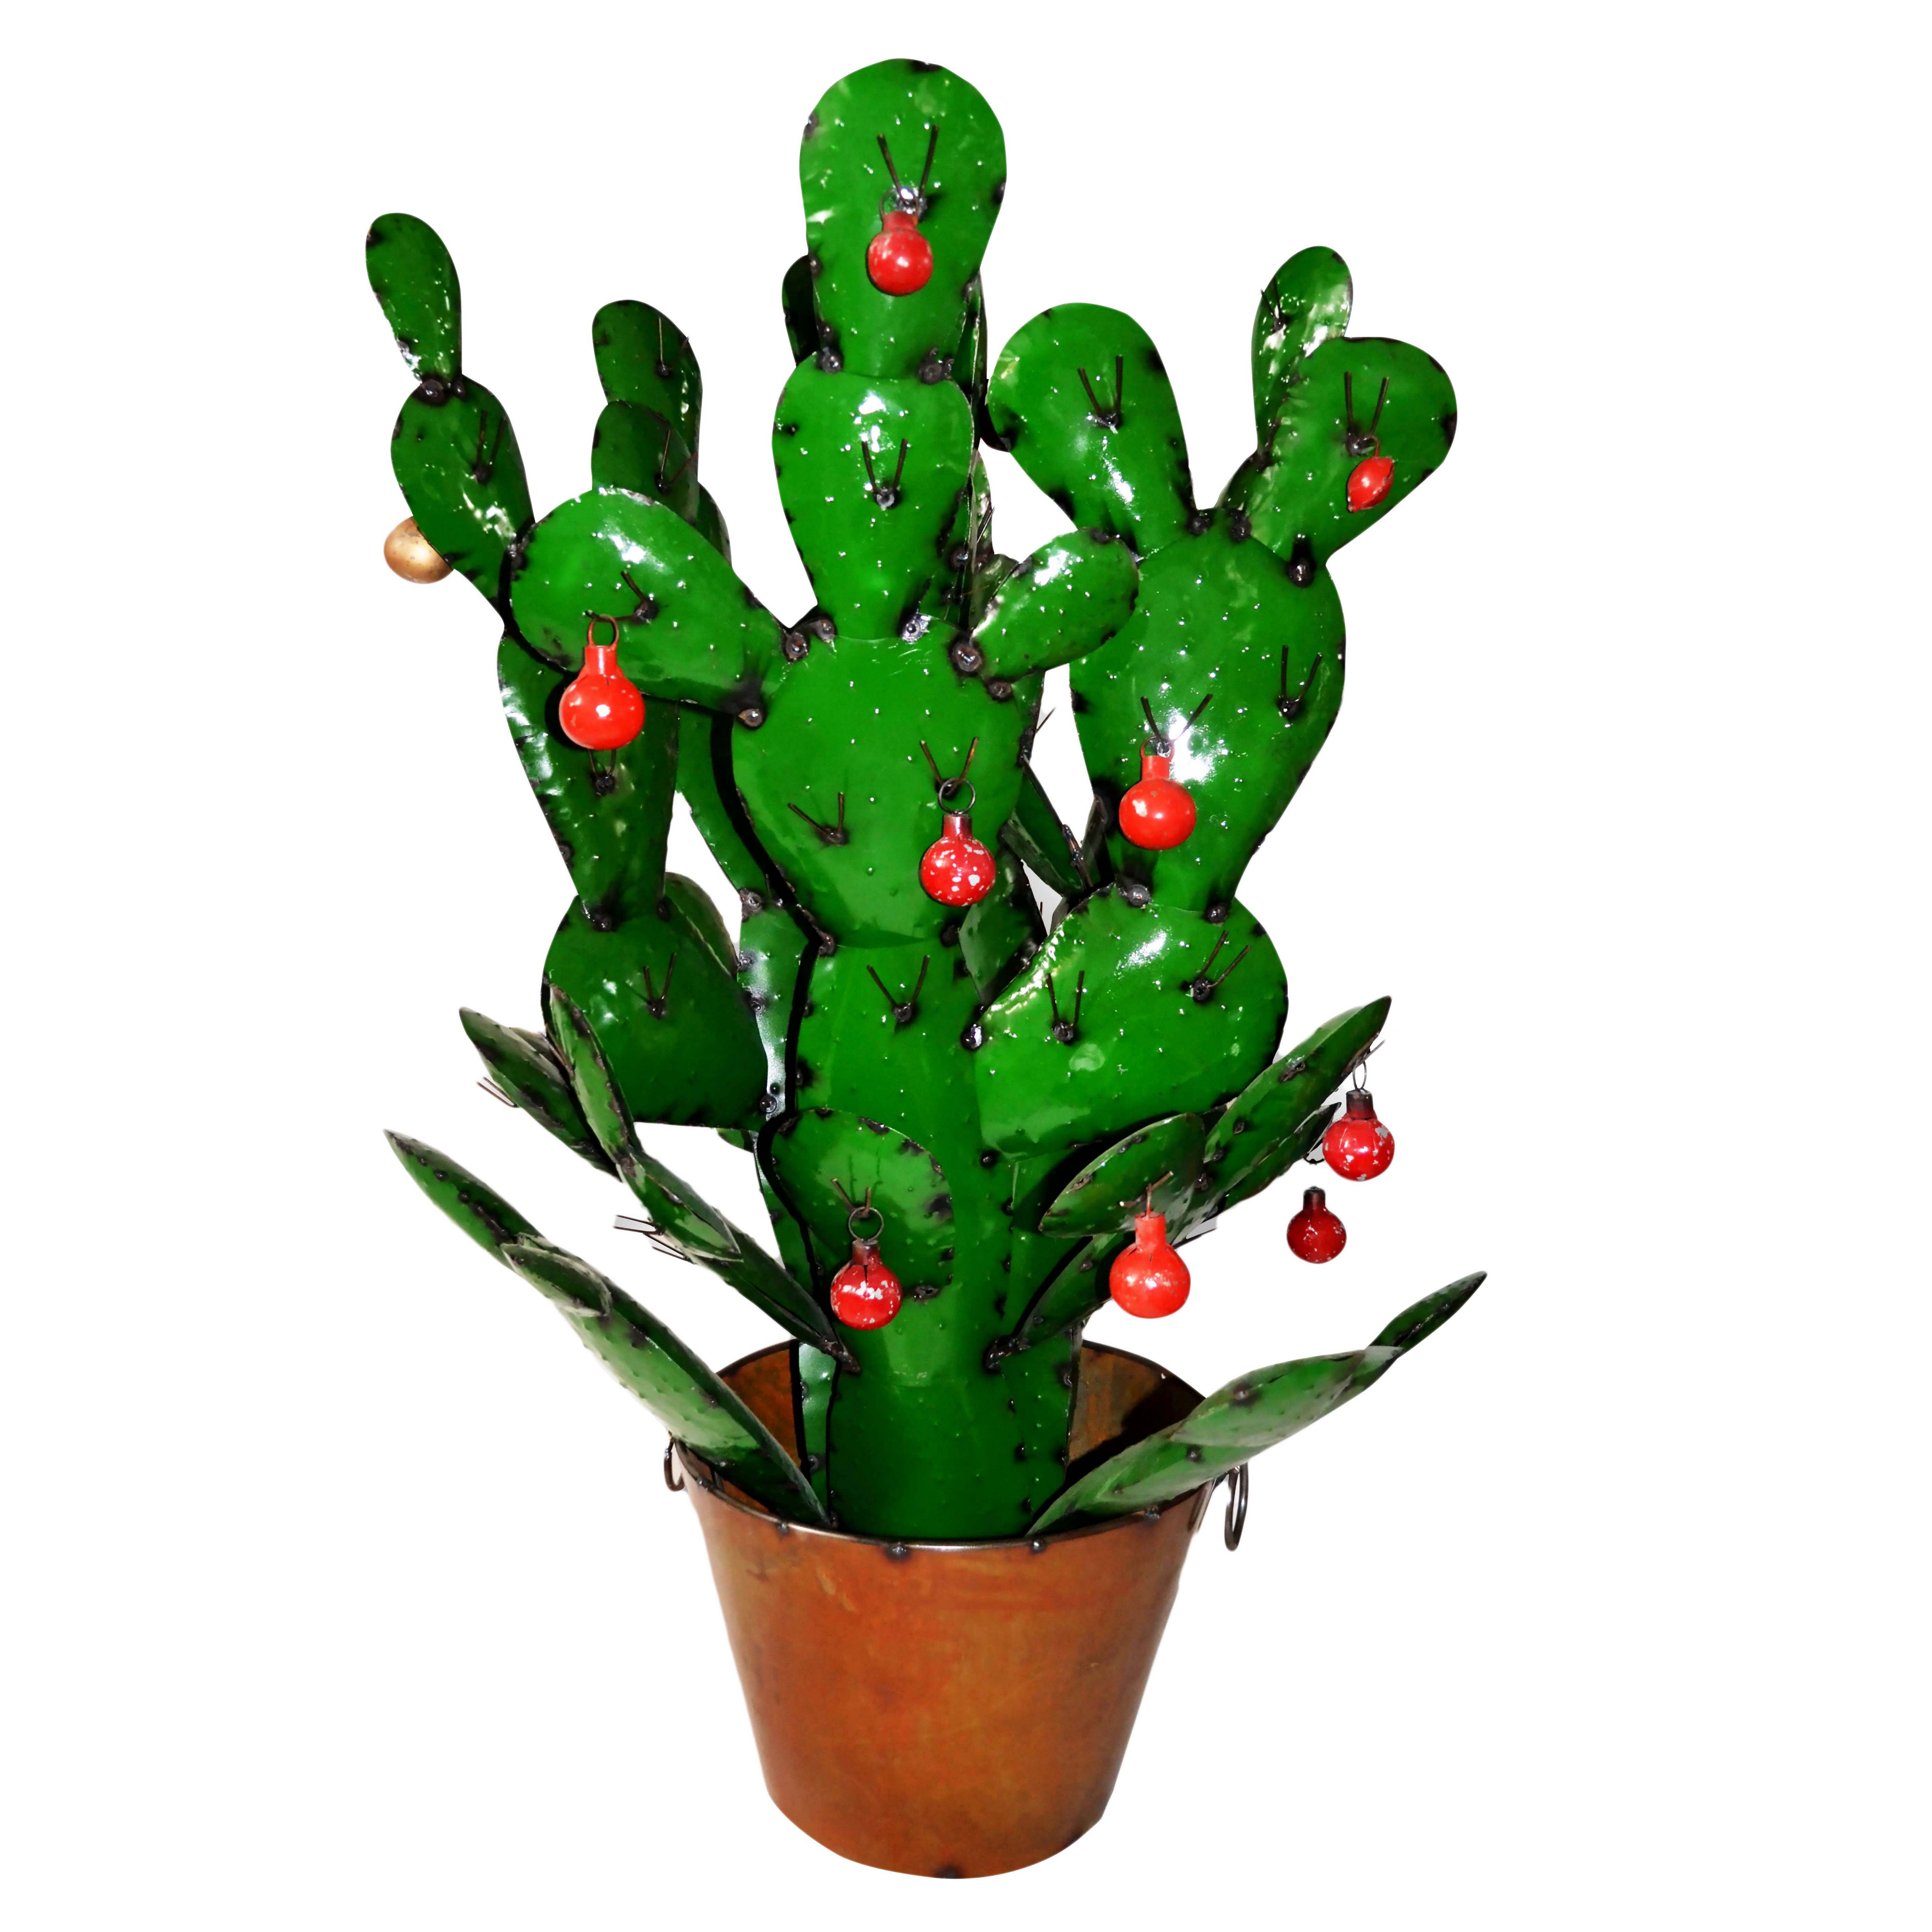 Creative Decor Sourcing Metal Christmas Cactus With Decorations Decor Shop Outdoor Decor At H E B